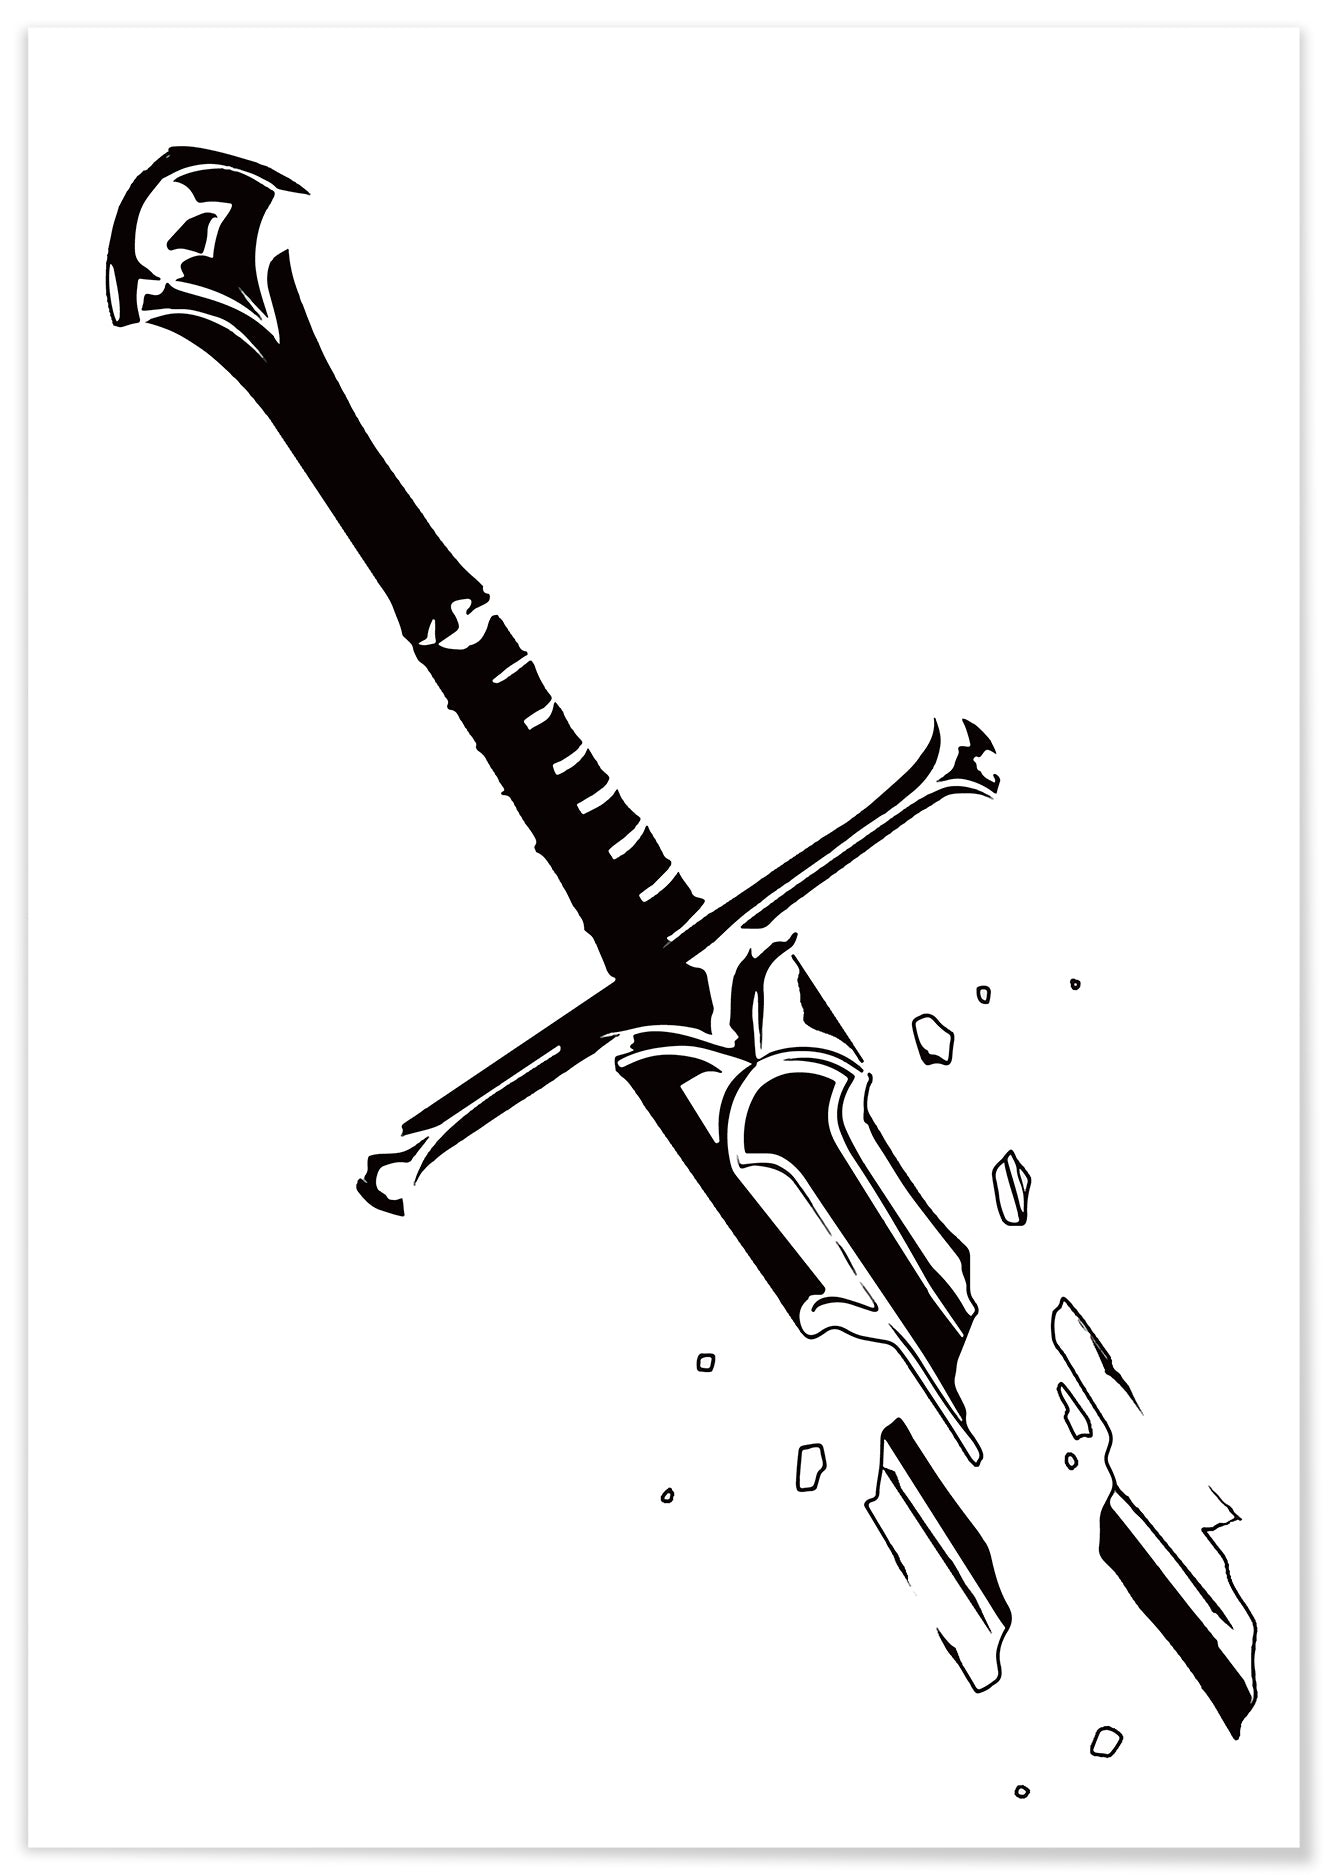 The Sword - @LeachScott